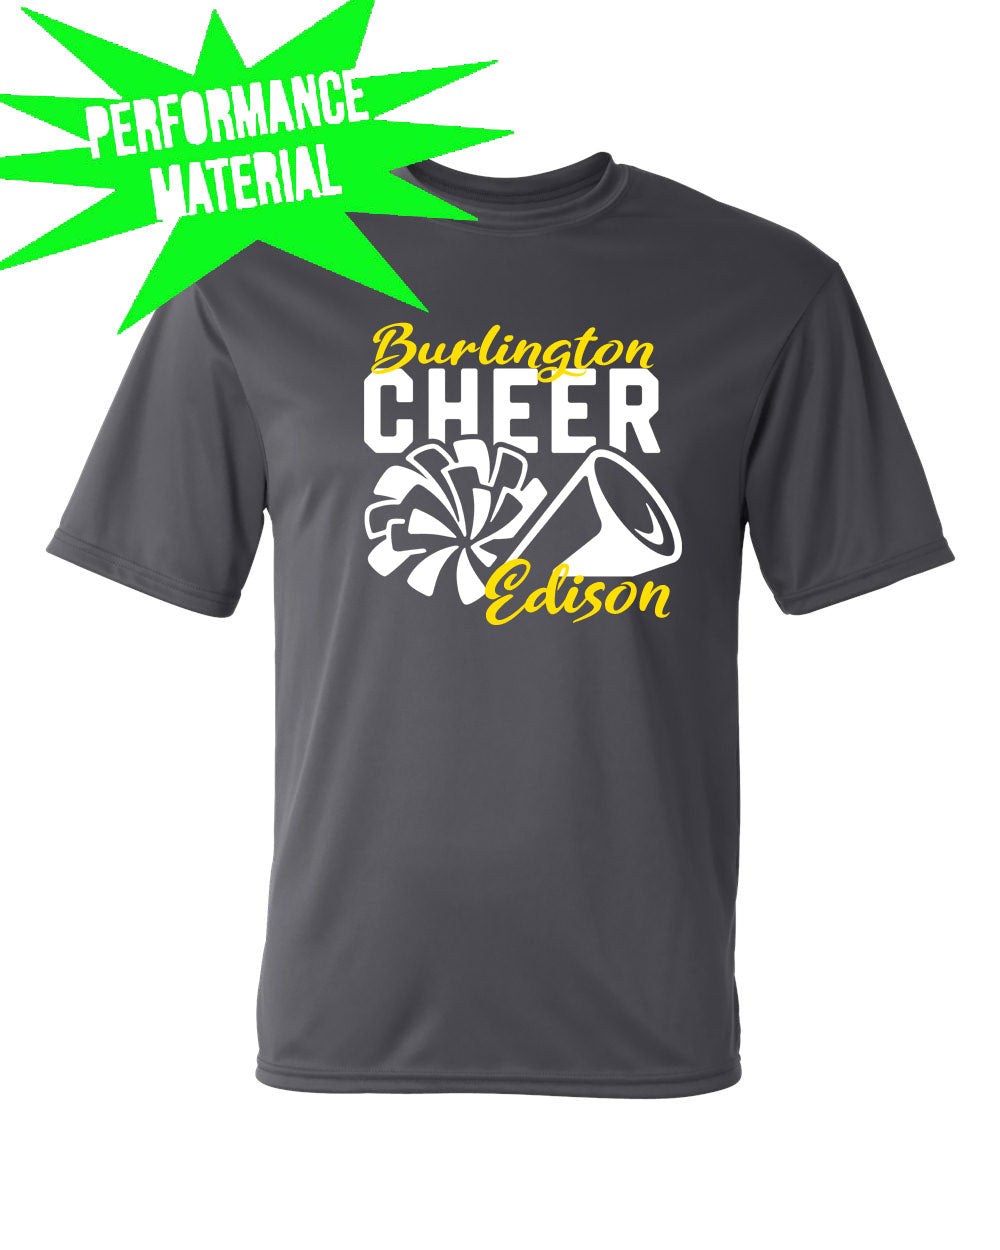 Burlington Edison Cheer Performance Material T-Shirt Design 3